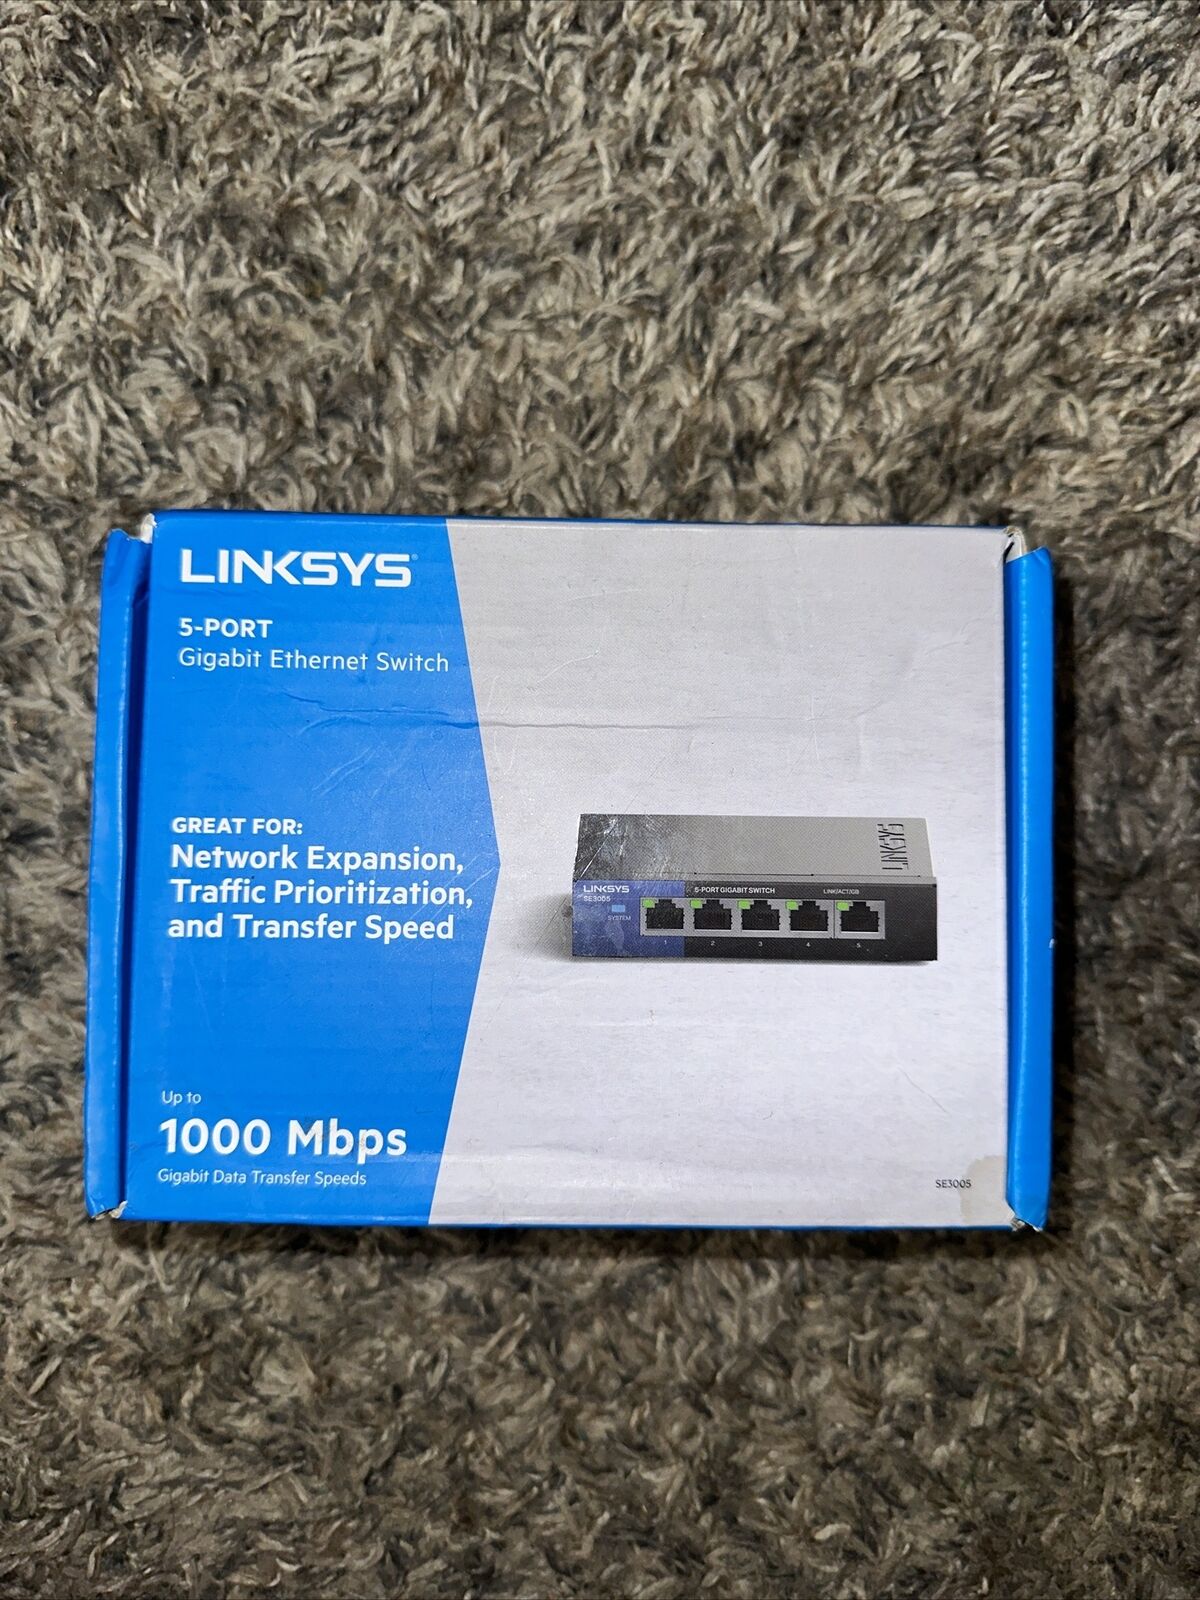 Linksys SE3005 V2 5-port Gigabit Ethernet Switch